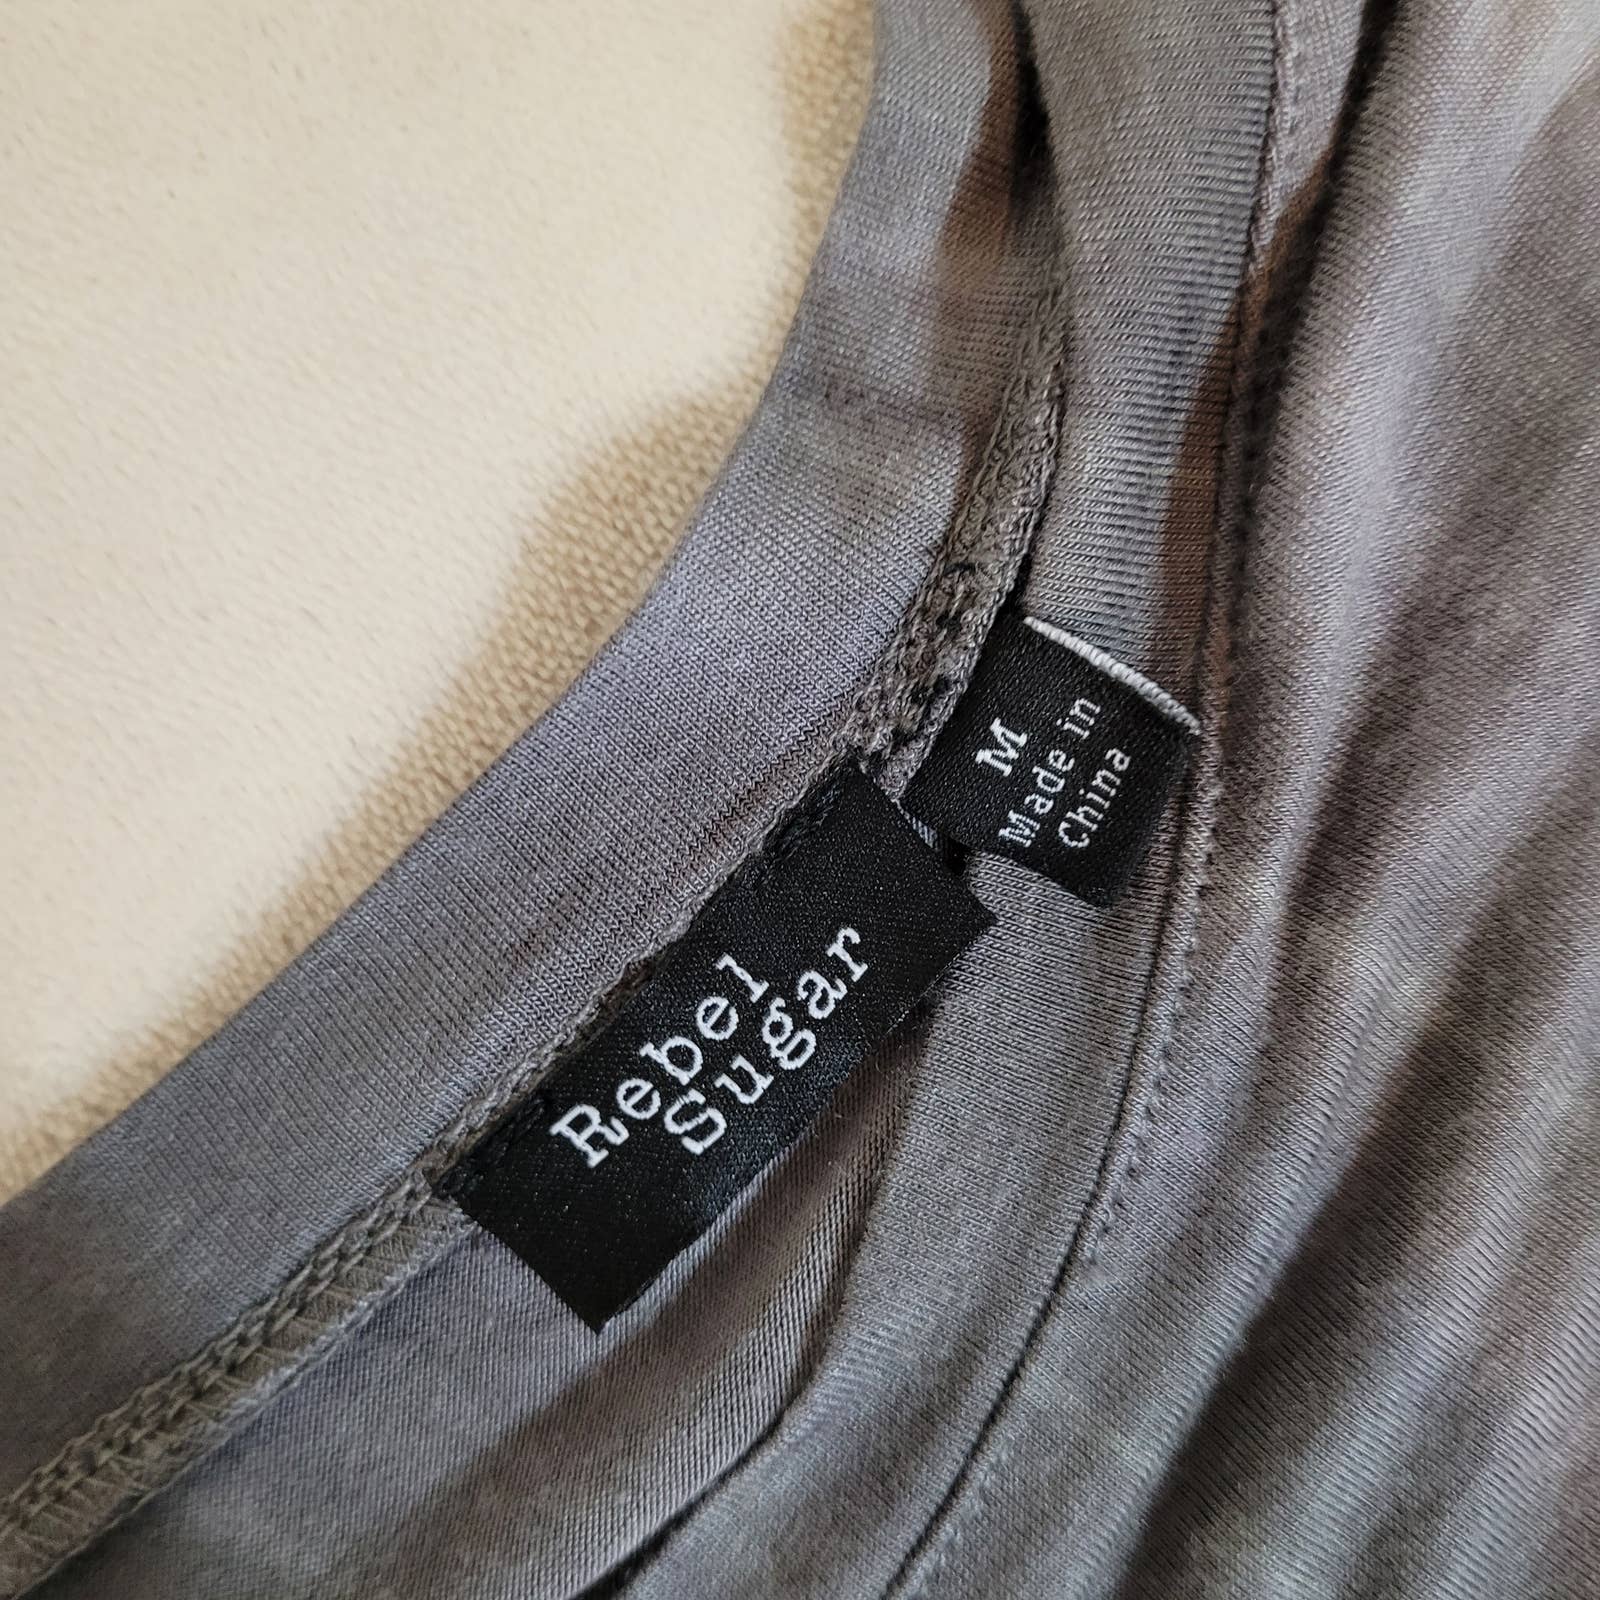 Rebel Sugar Montana Holland Peak Gray Tie Dye T-Shirt - Size MediumMarkita's ClosetRebel Sugar